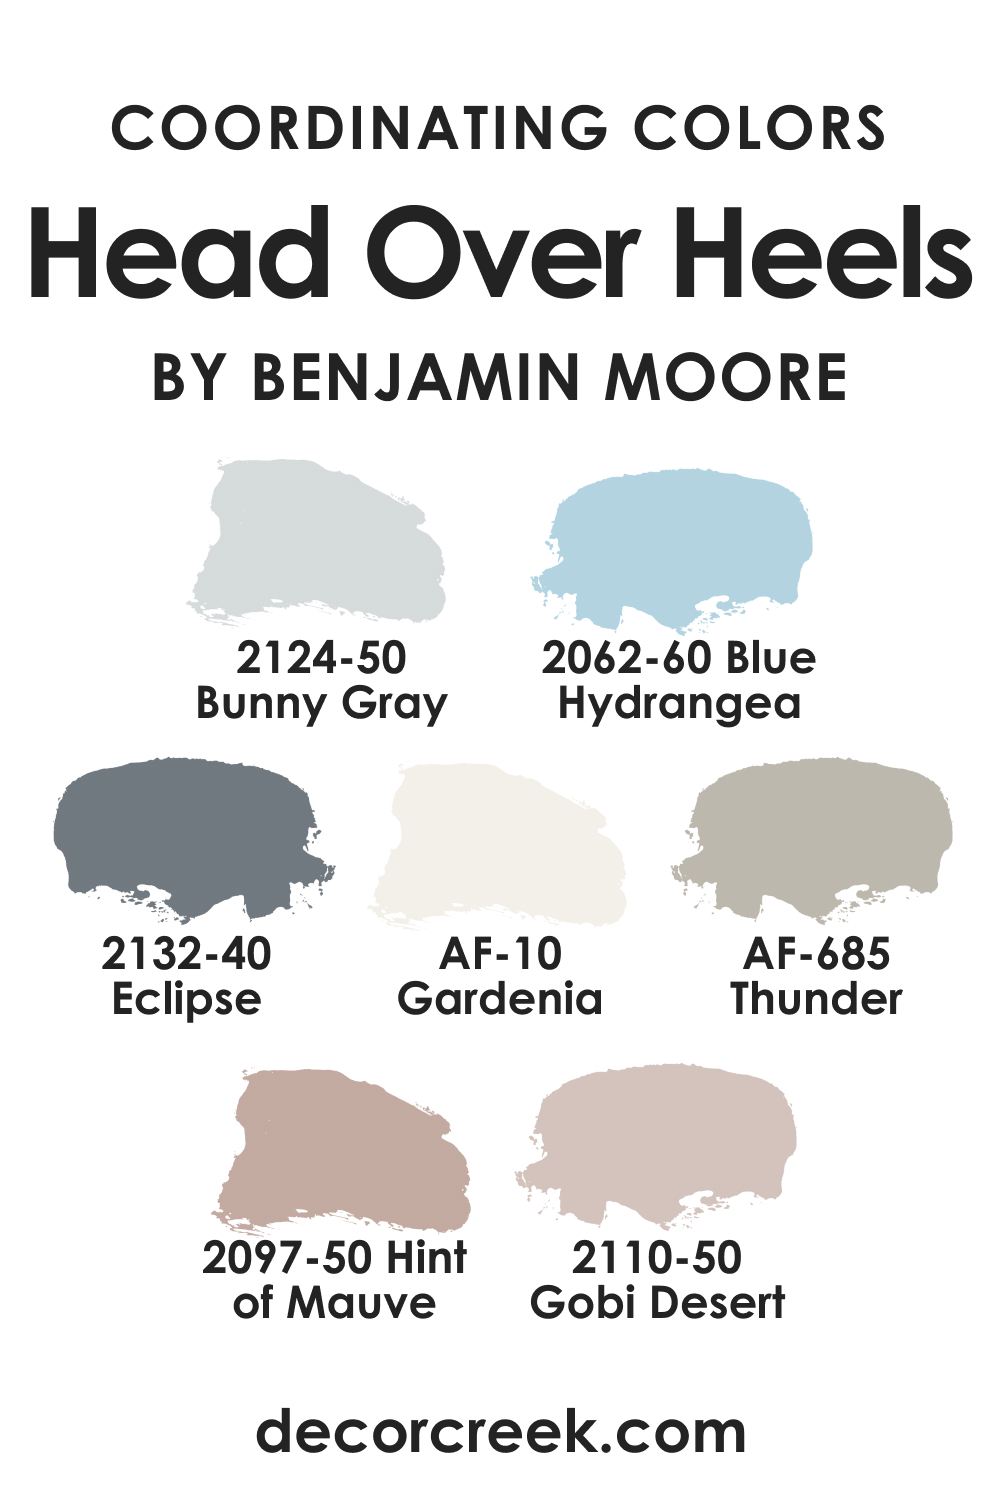 Coordinating Colors of Head Over Heels AF-250